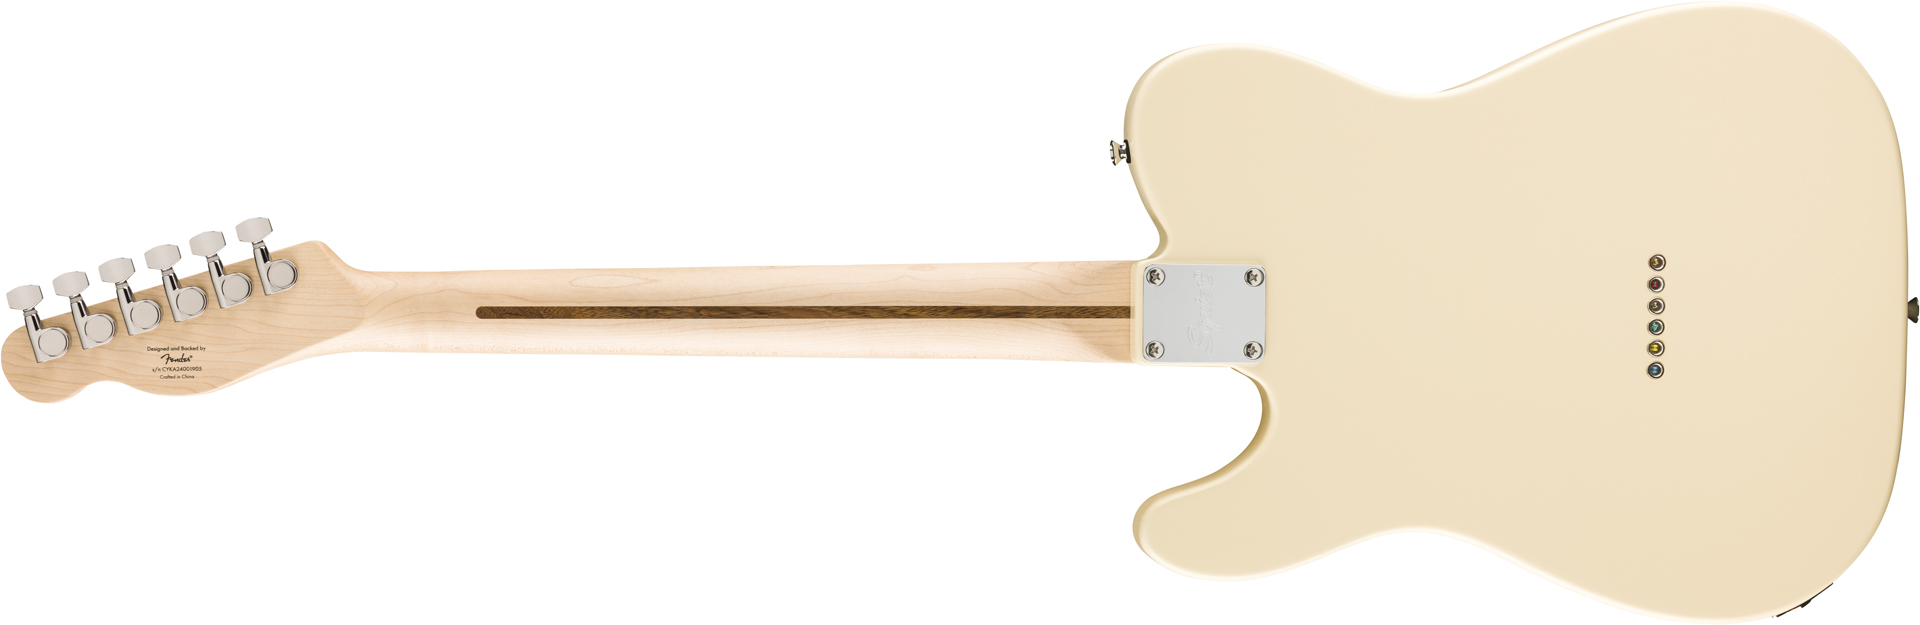 Fender Squier Affinity Telecaster Thinline rear